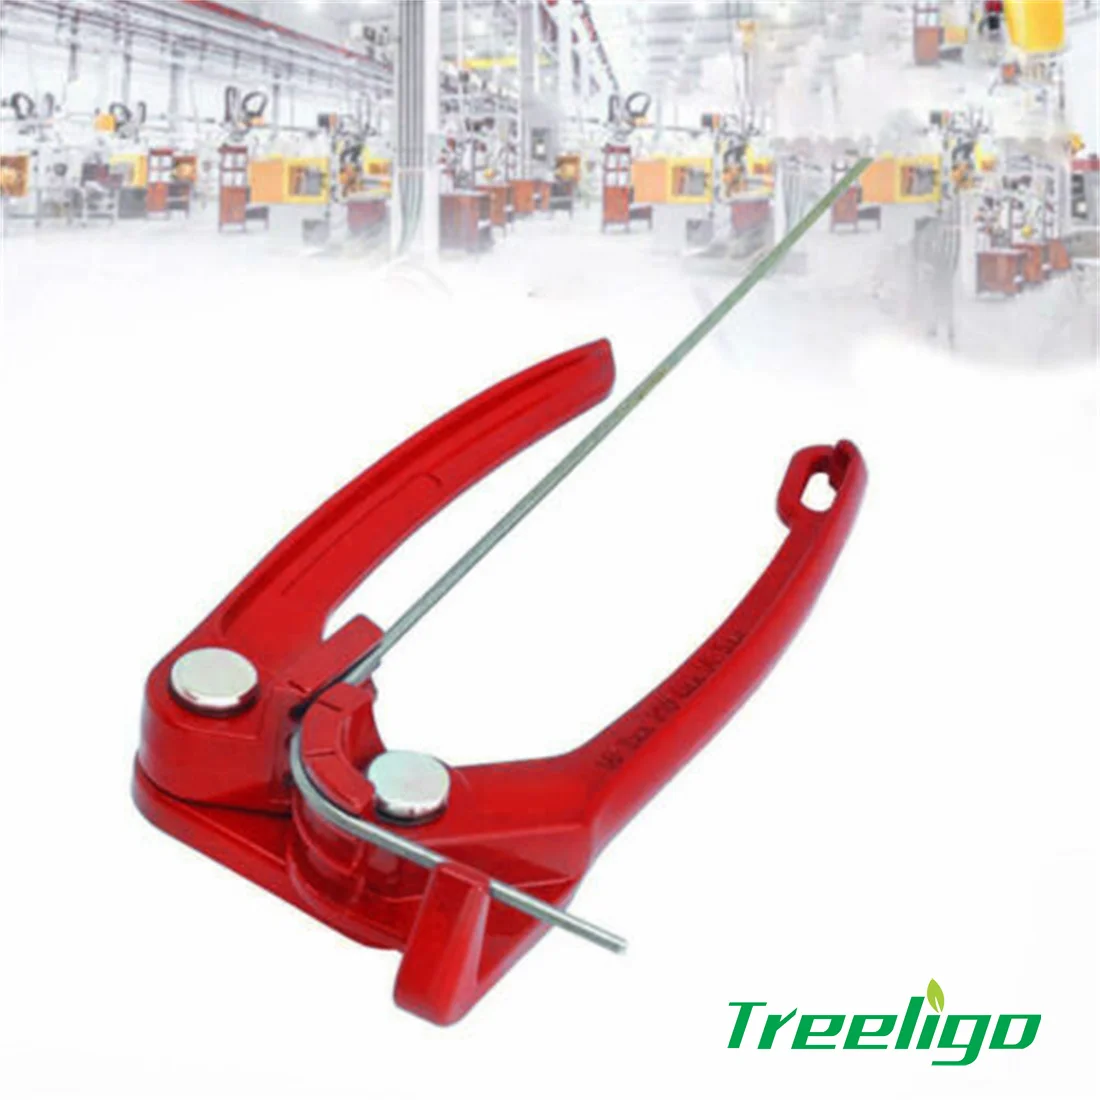 Treeligo Air conditioner Pipe Tube bender 3-in-1 manual tube bending tool for most metals 1/8 3/16 1/4